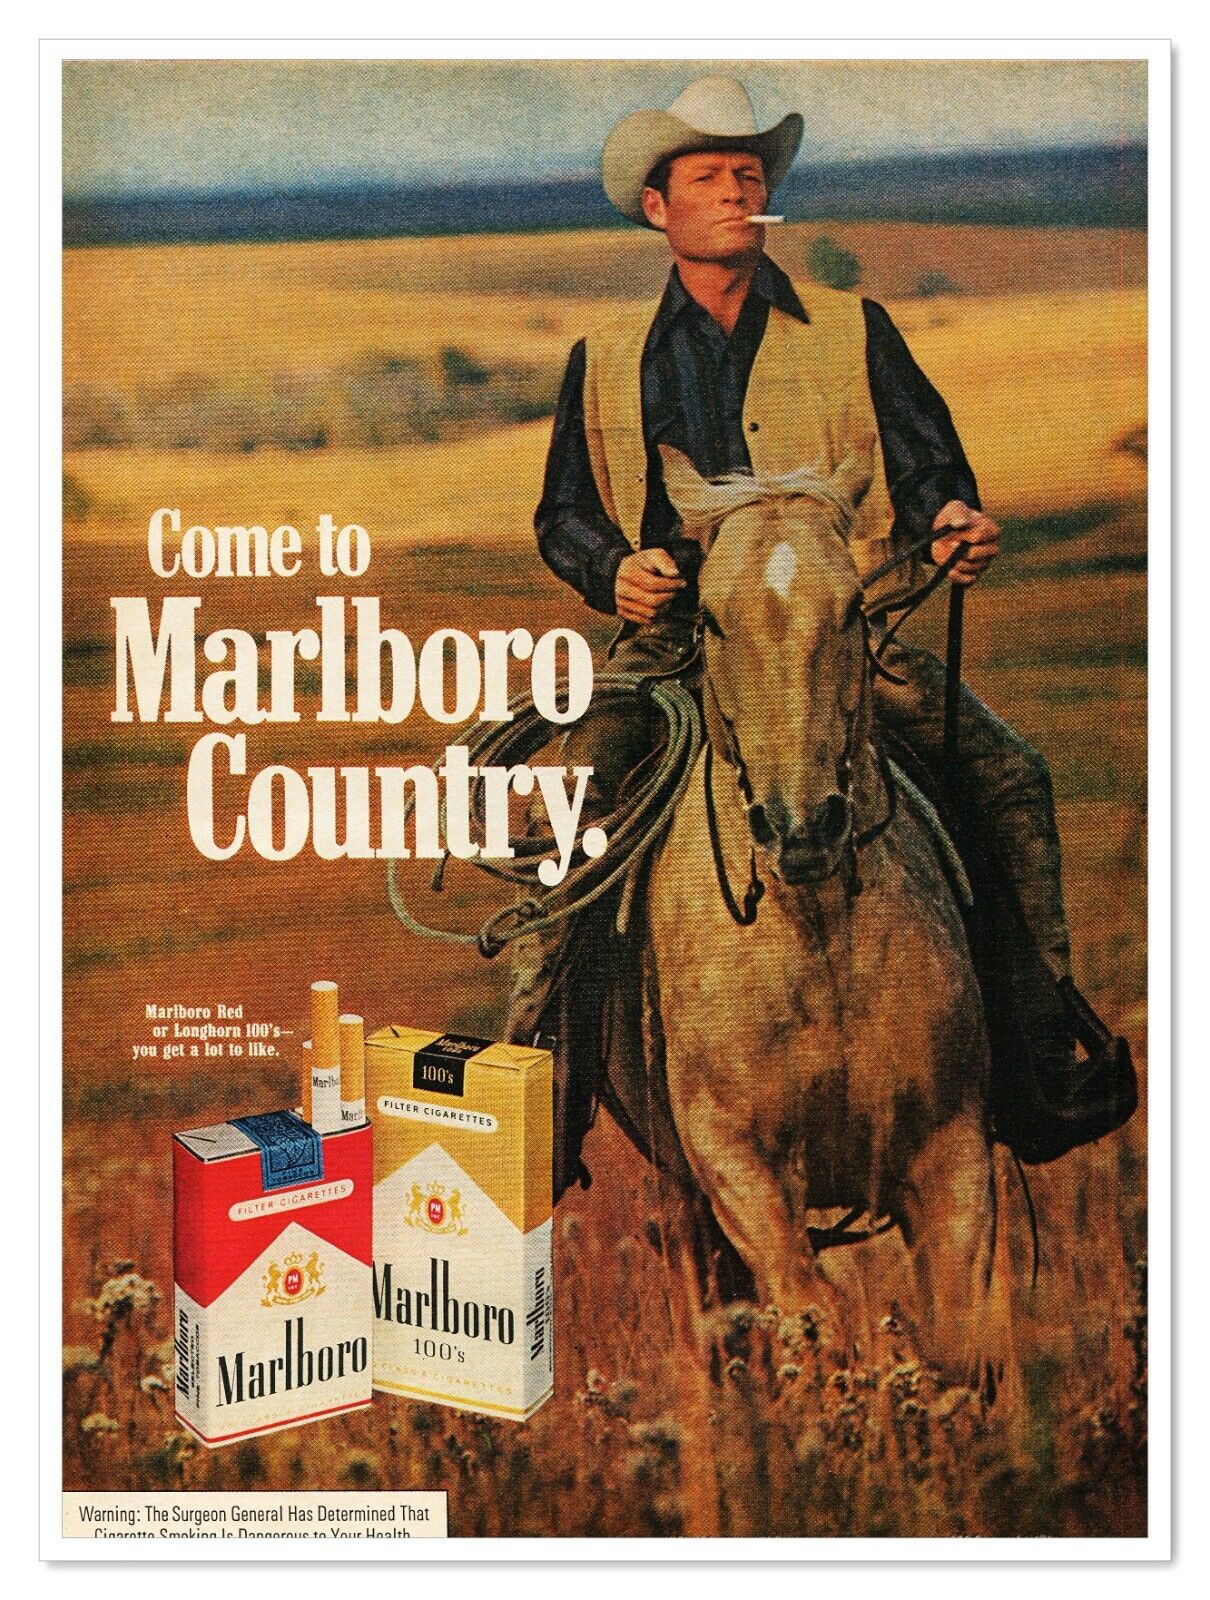 Print Ad Come to Marlboro Country Cowboy Cigarettes  Vintage 1972 Advertisement